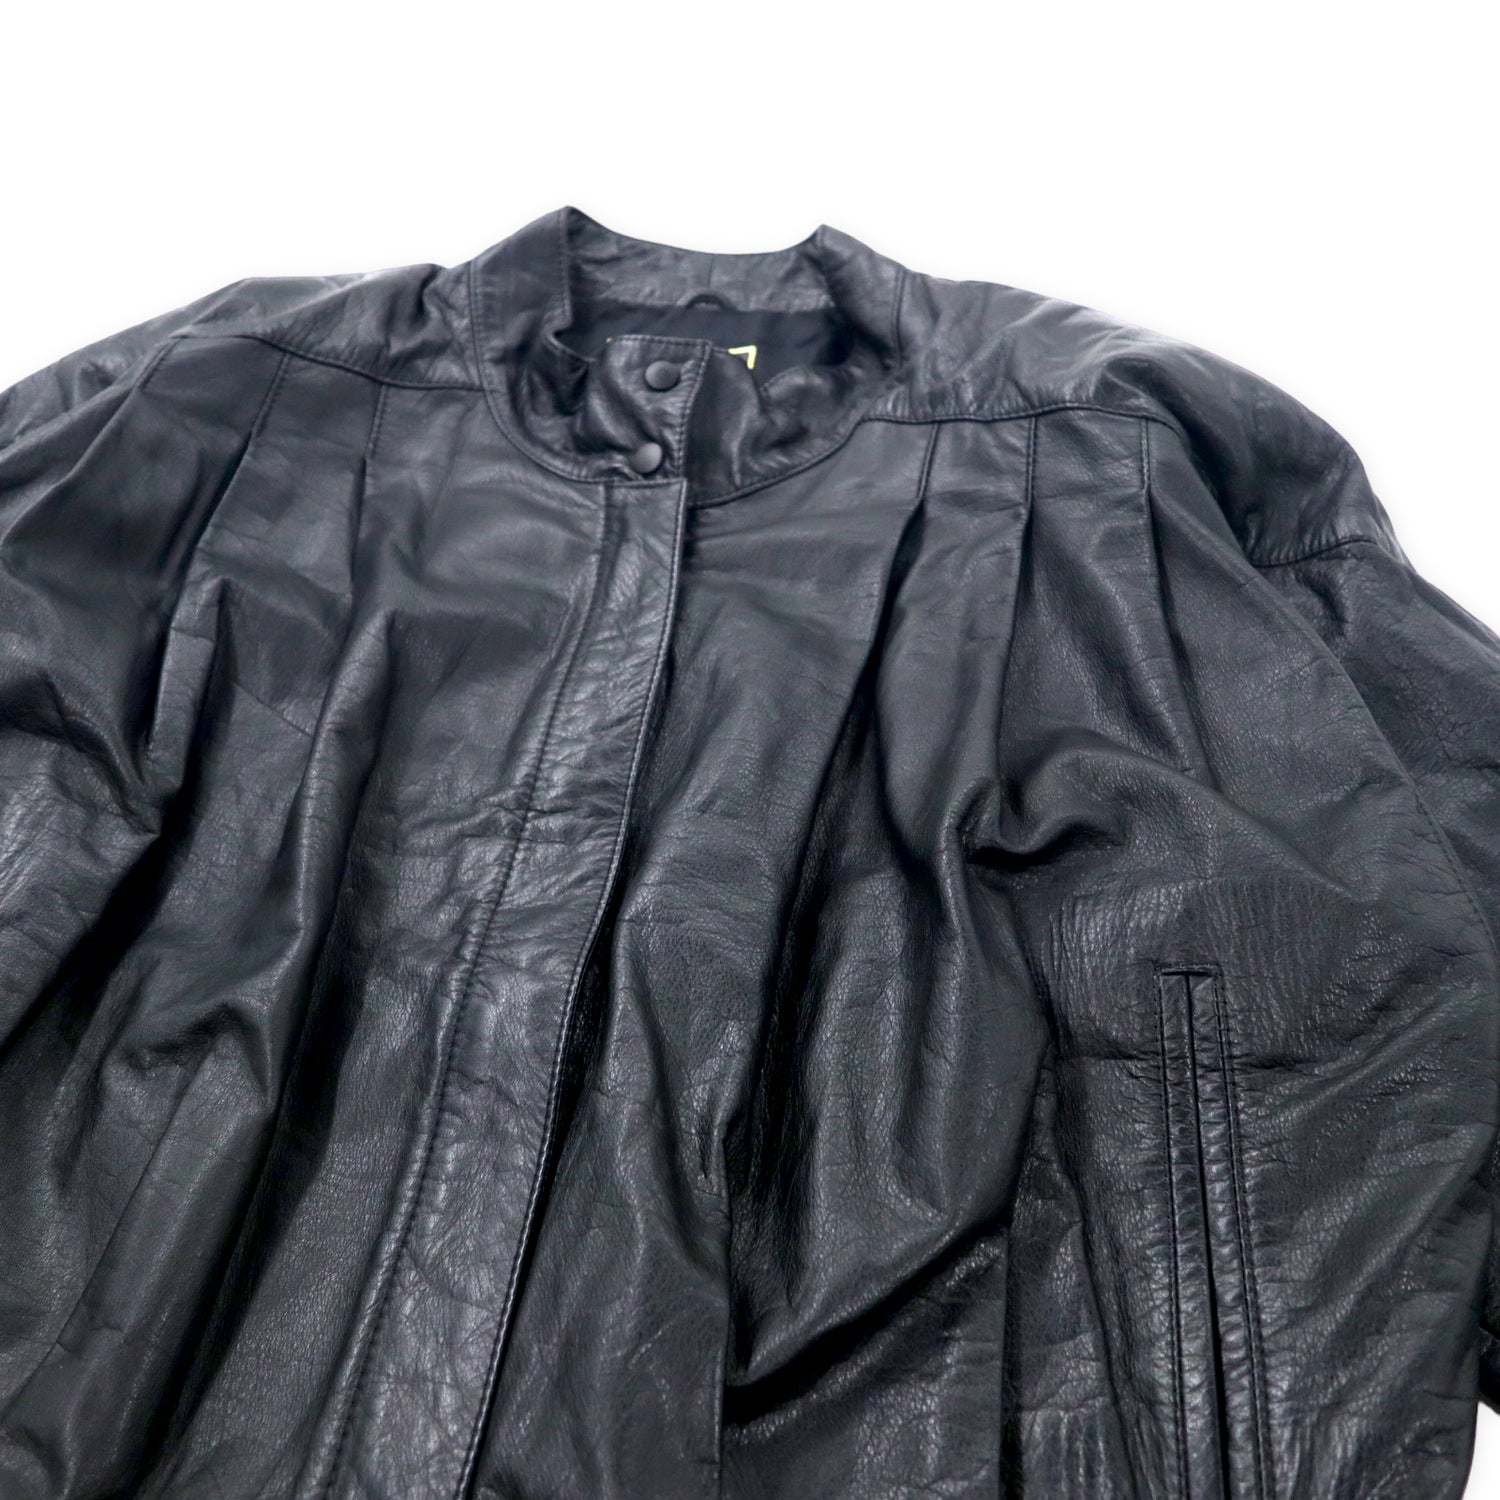 FROMAGE Leather Blouson Flight Jacket Free Black Cowhide Japan